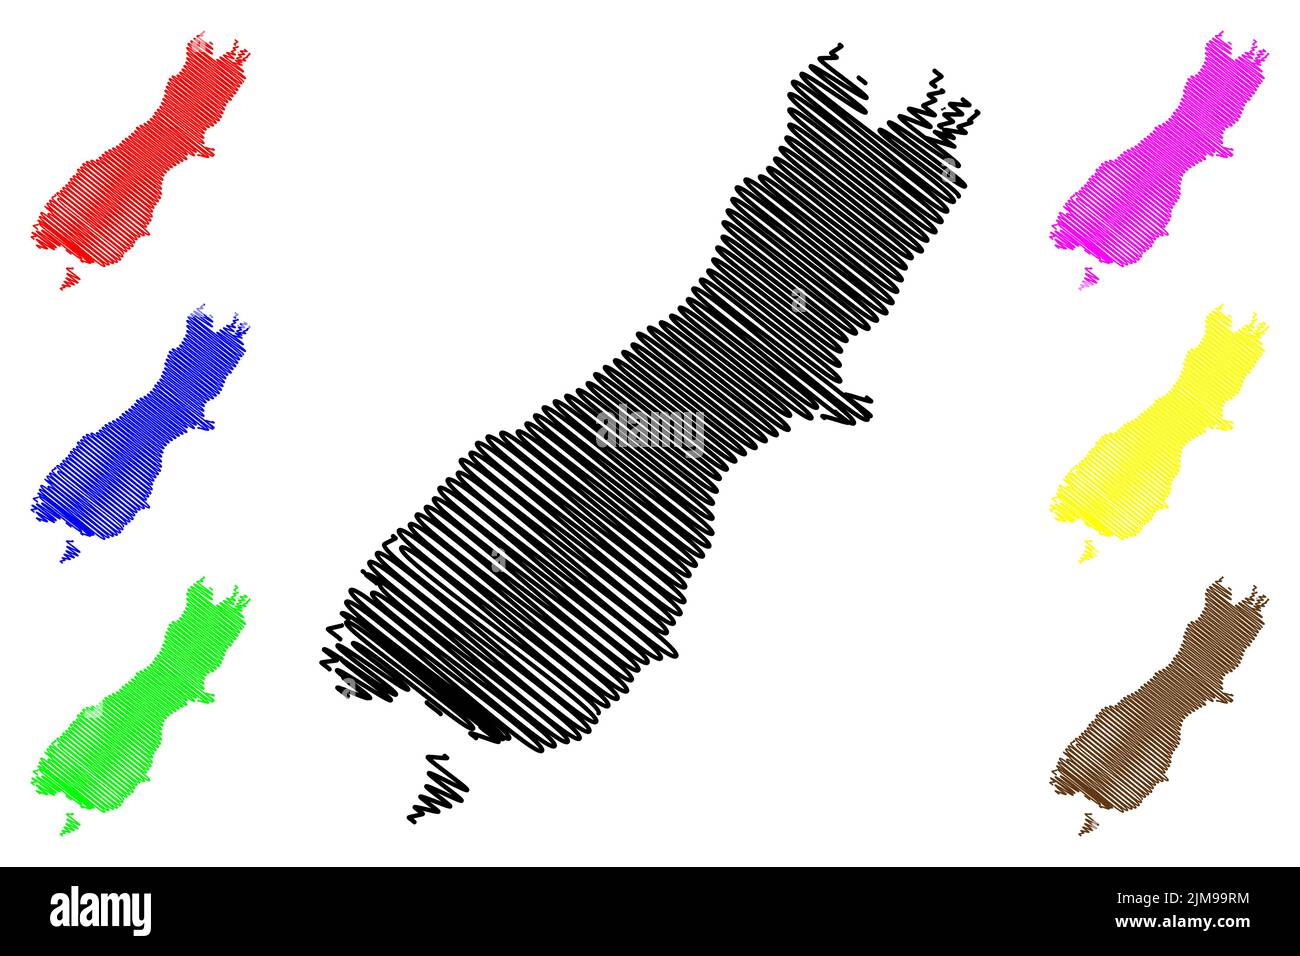 Südinsel (Neuseeland) Kartenvektordarstellung, Skizze Te Waipounamu Karte Stock Vektor